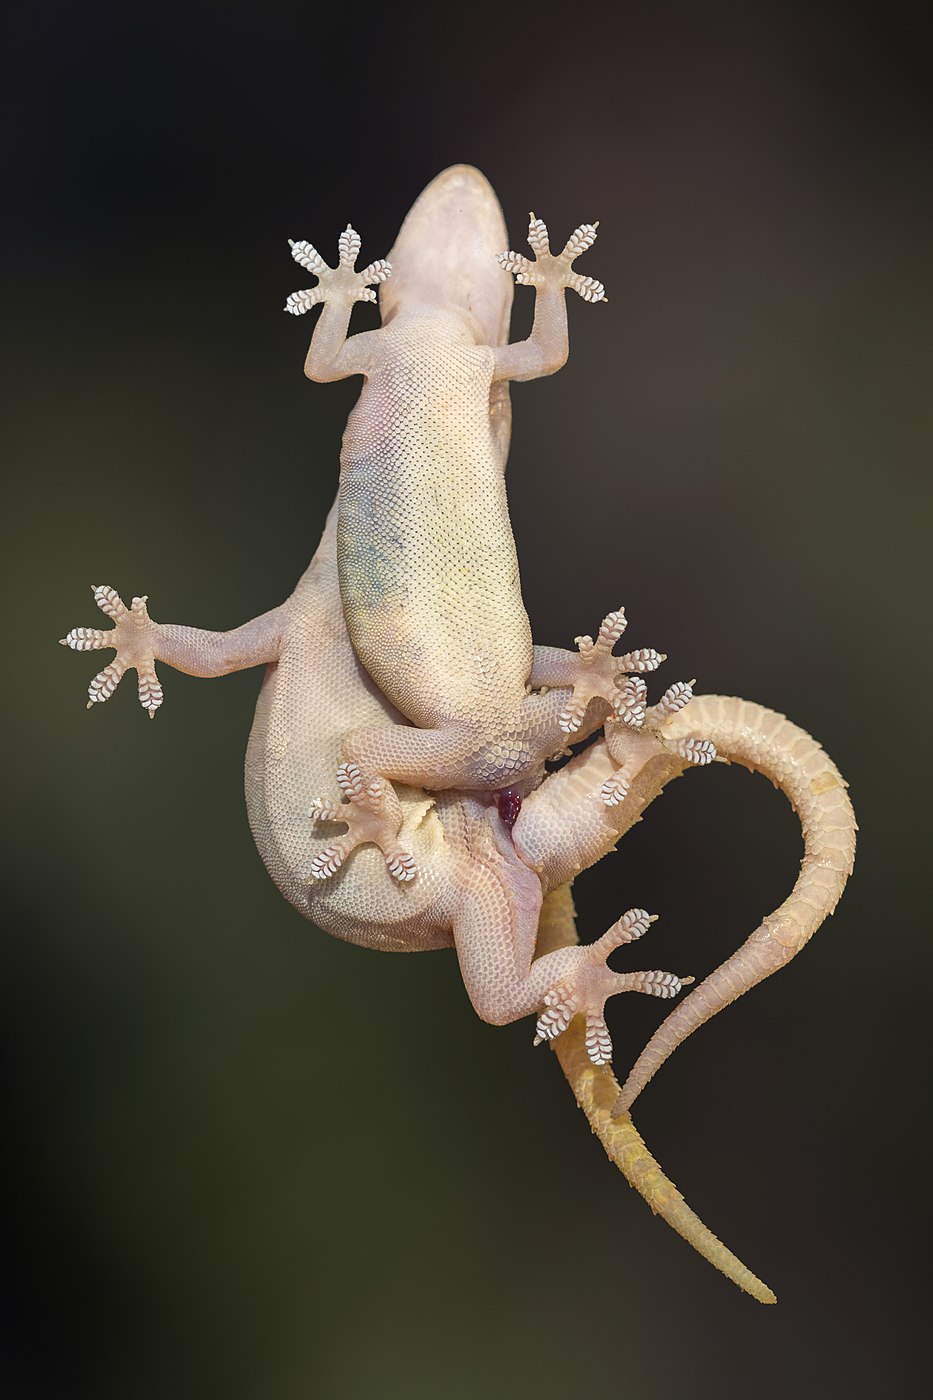 Common House Geckos (Hemidactylus frenatus) mating